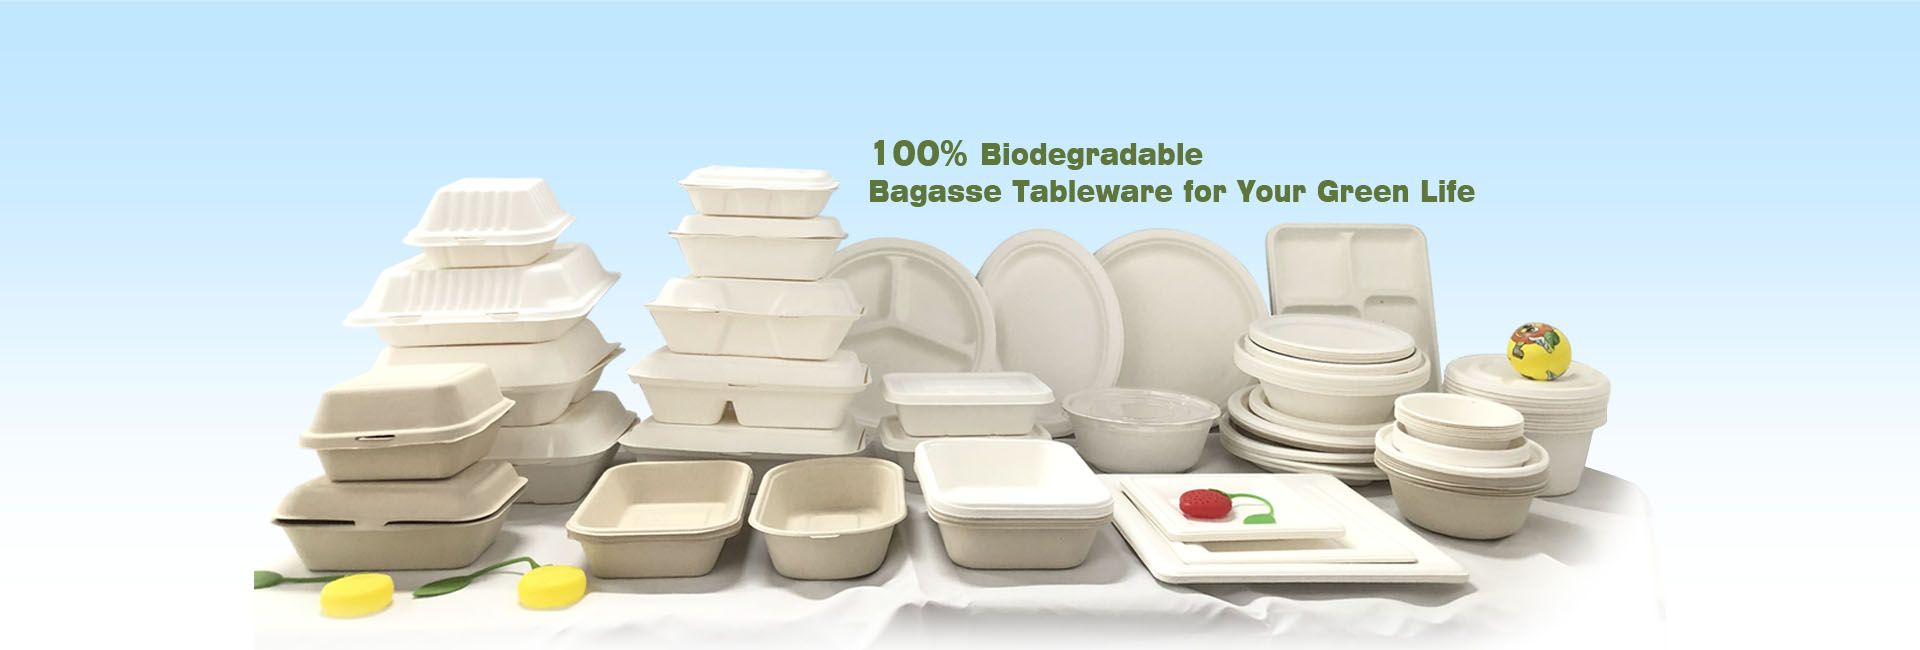 Bagasse tableware